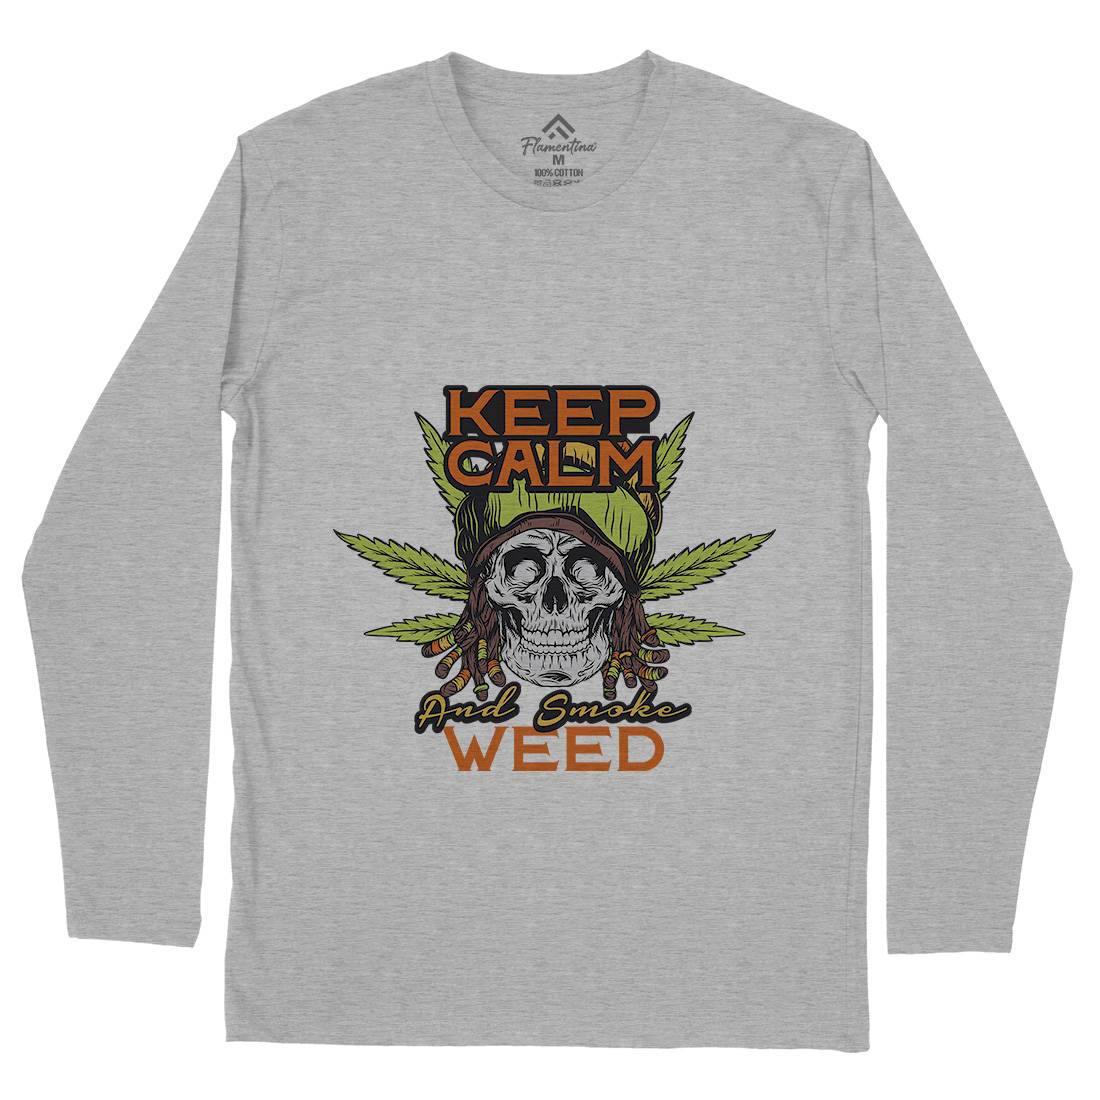 Keep Calm Mens Long Sleeve T-Shirt Drugs D951